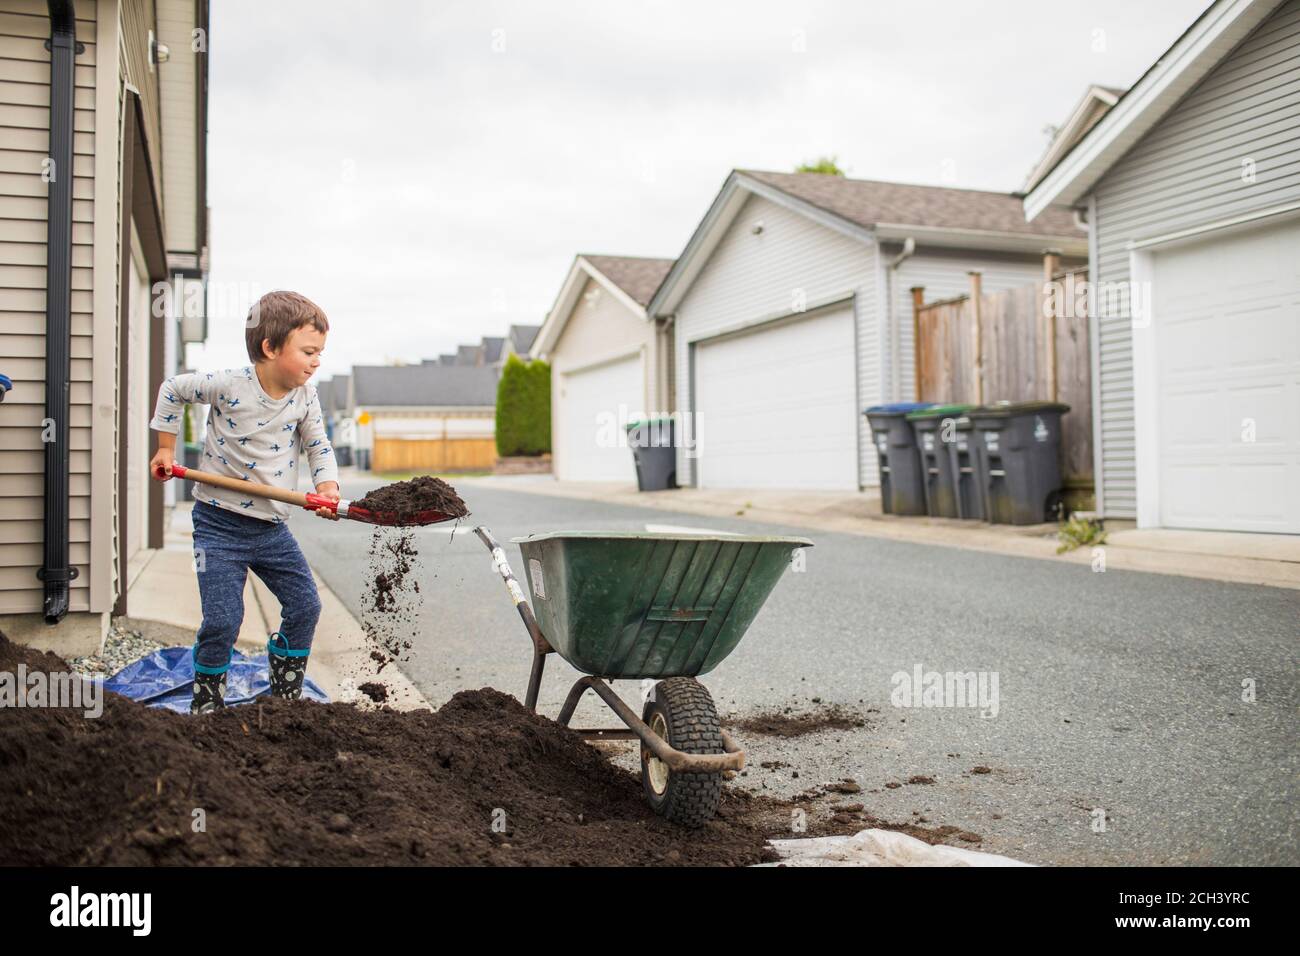 Young boy lifting shovel full of soil into wheelbarrow in back alley Stock Photo